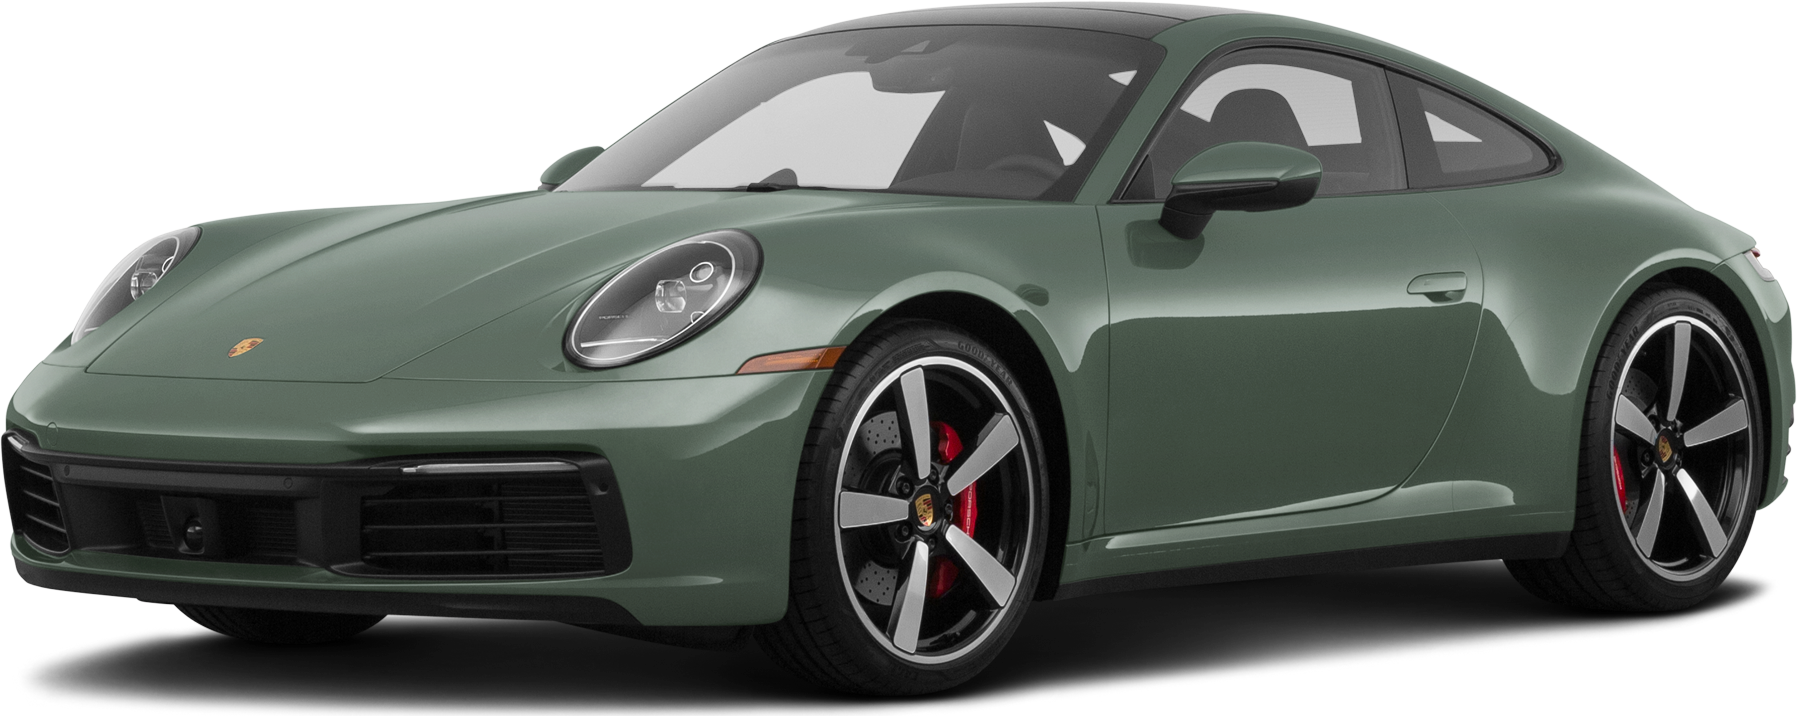 2020 Porsche 911 Carrera S Options List: Pricing, Info, Photos, Specs